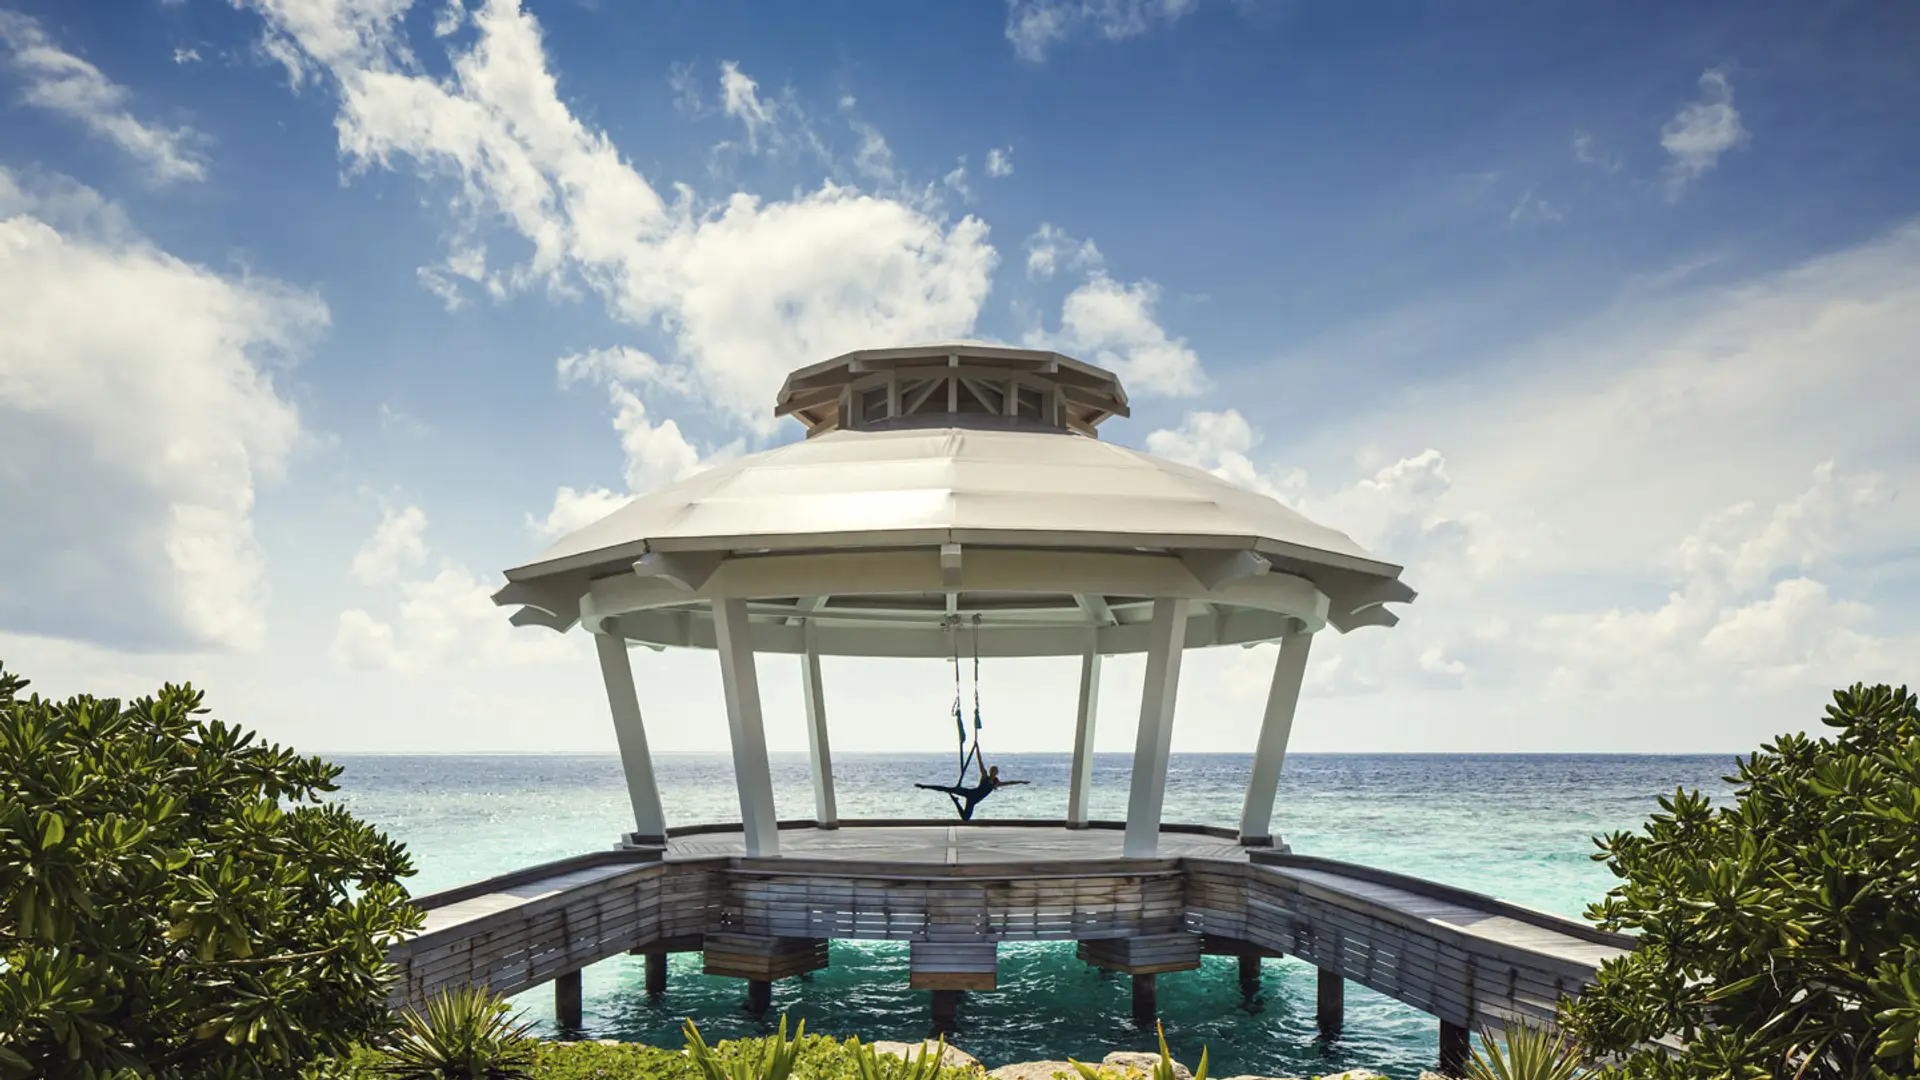 Hotel review Service & Facilities' - Waldorf Astoria Maldives Ithaafushi - 6